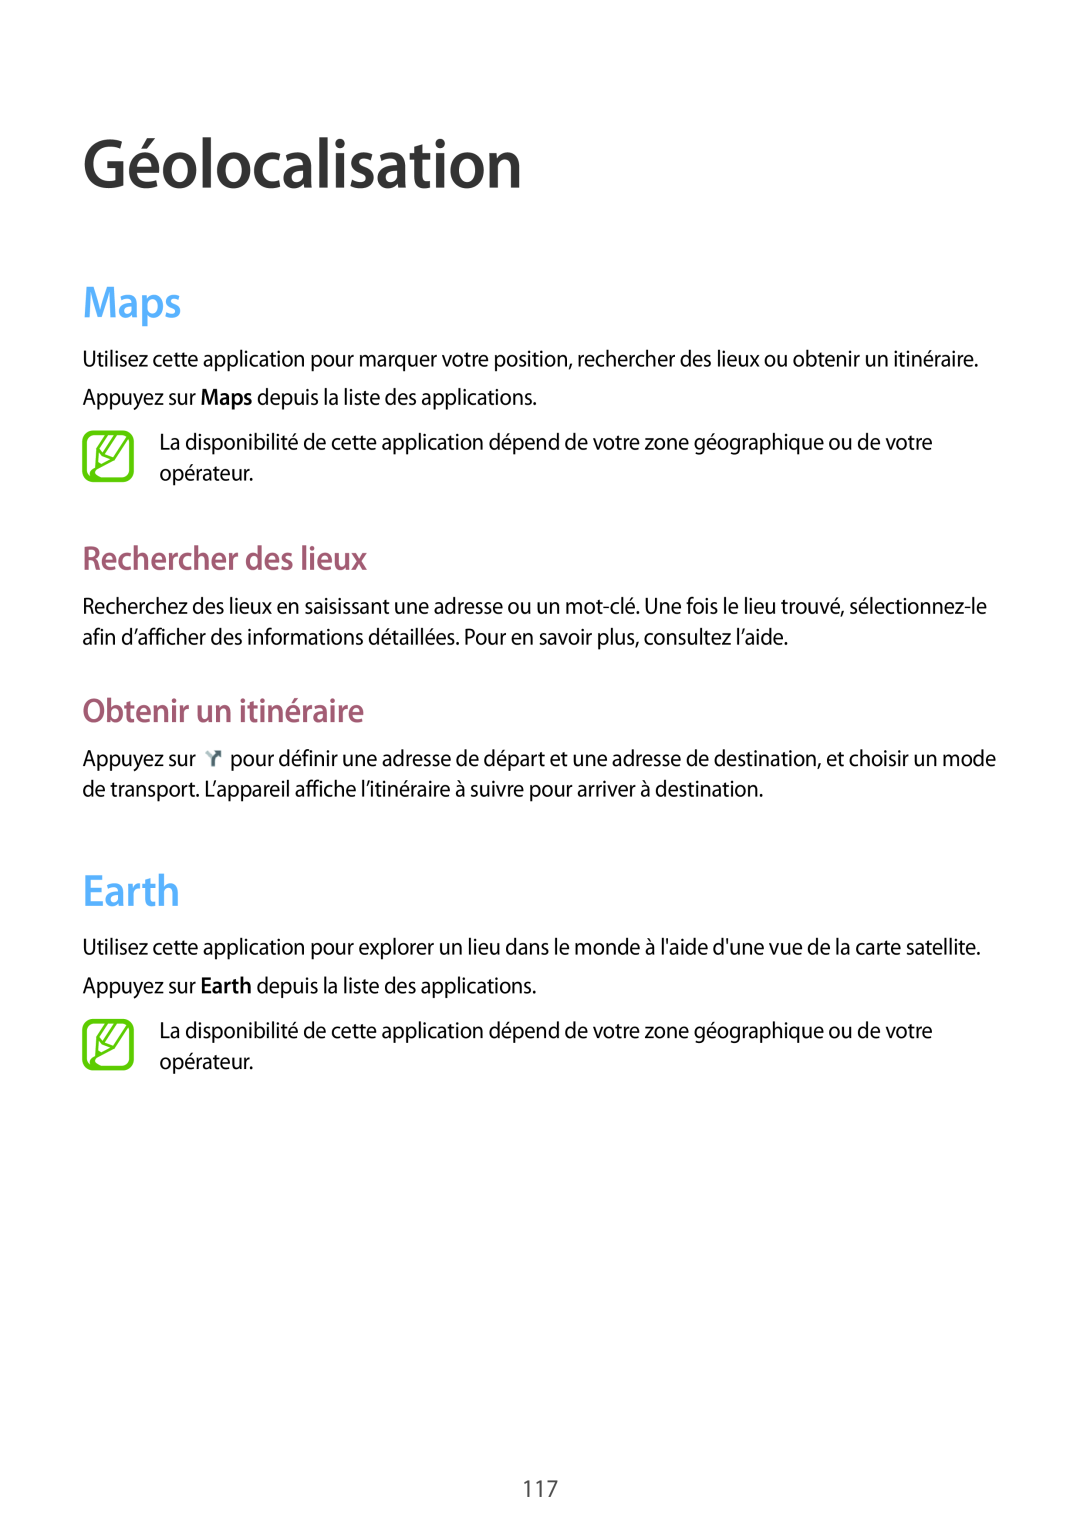 Samsung GT-N7105RWDSFR, GT-N7105TADXEF manual Géolocalisation, Maps, Earth, Rechercher des lieux, Obtenir un itinéraire 